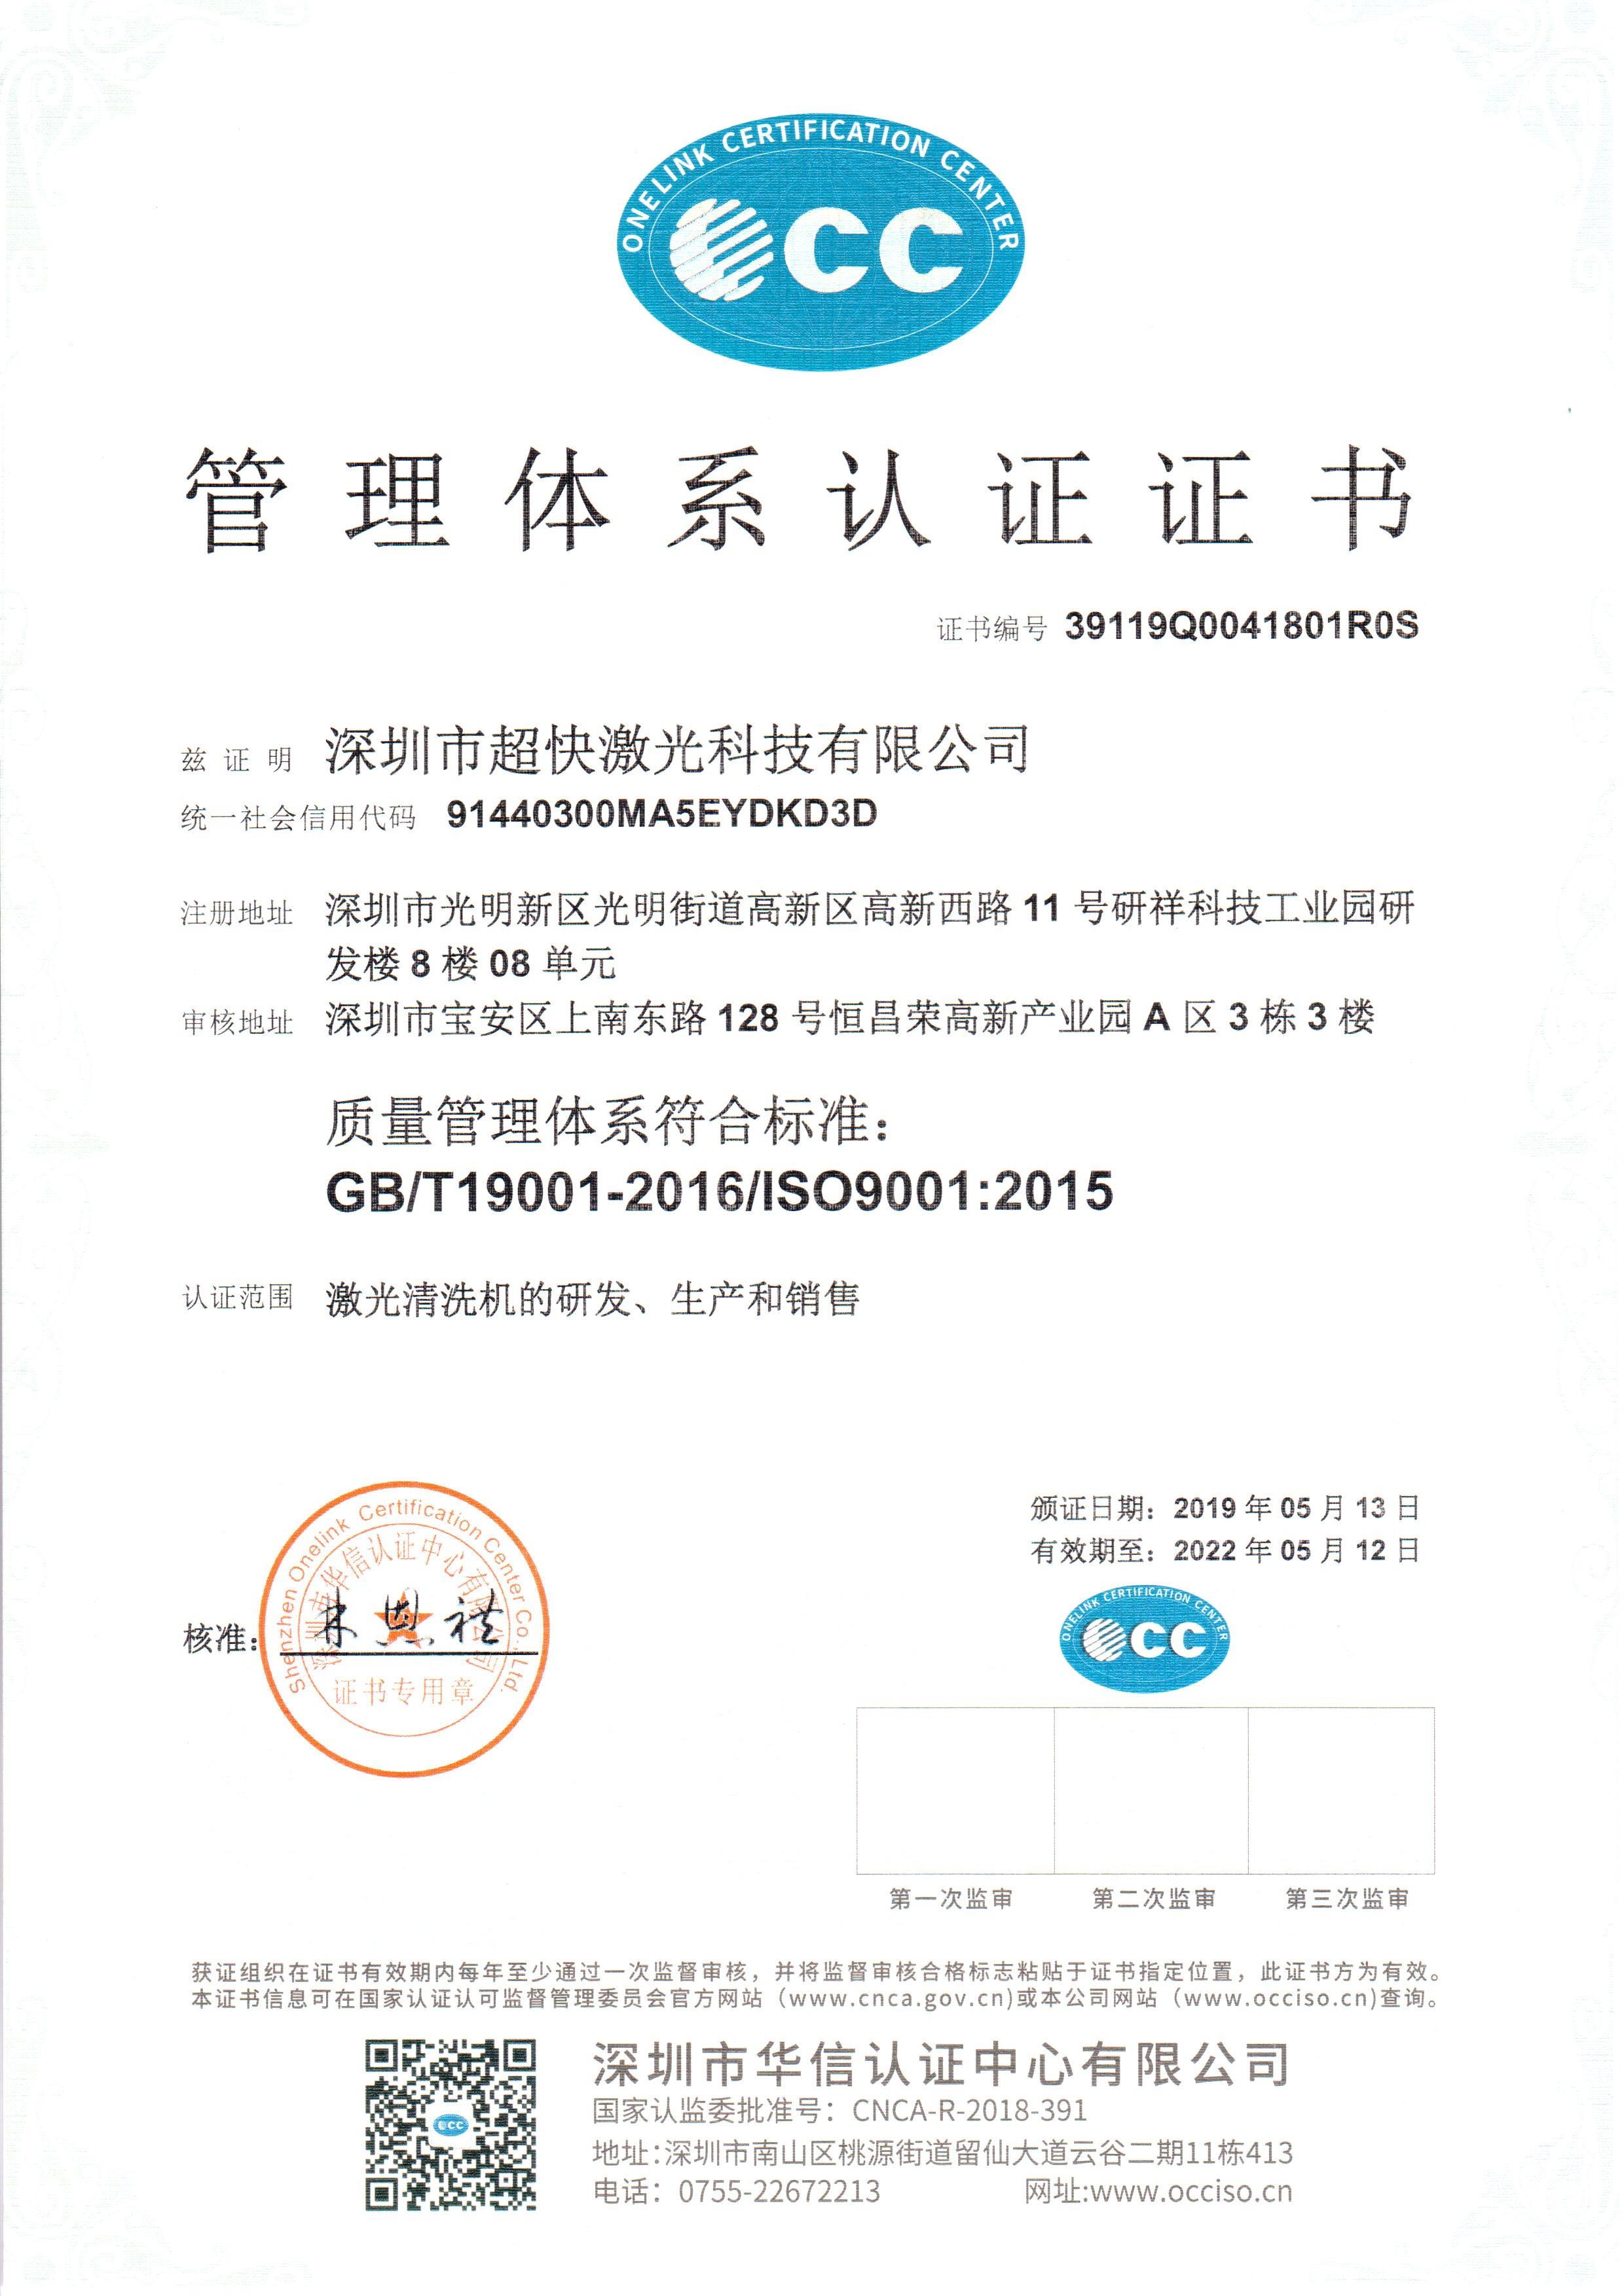 China Shenzhen Super Fast Laser Technology Co., Ltd. Certification